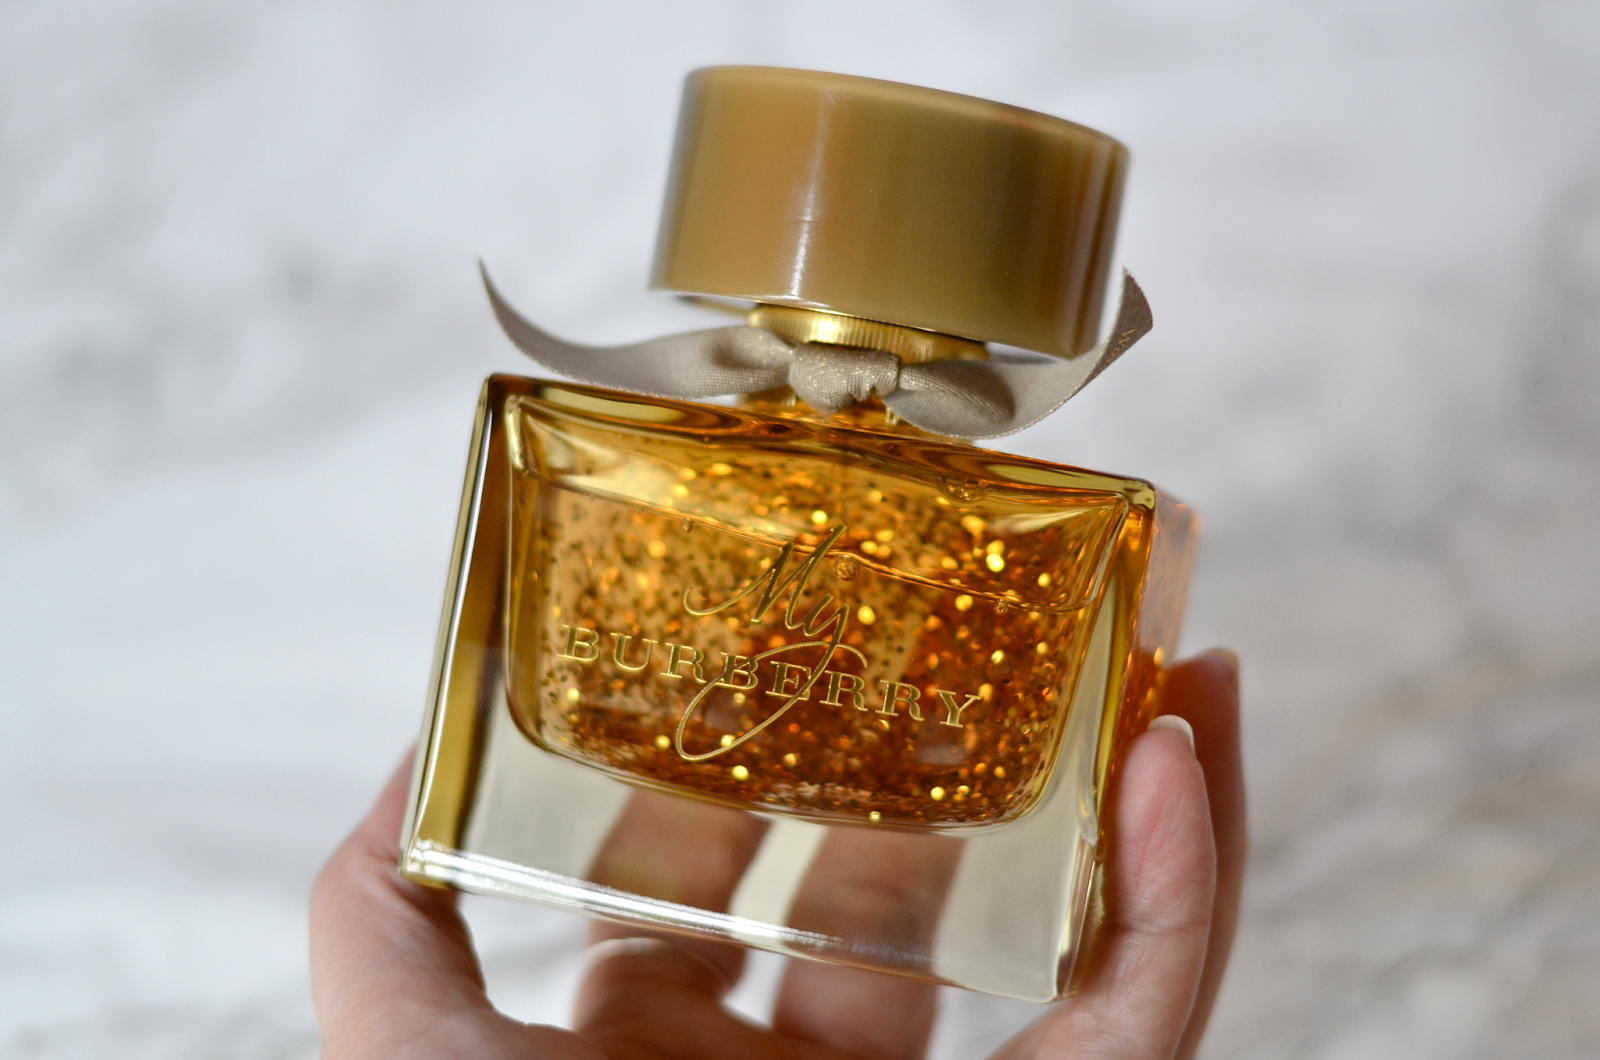 The 'My Burberry' Fragrance Gets A Glittery For Christmas Hayley Hall